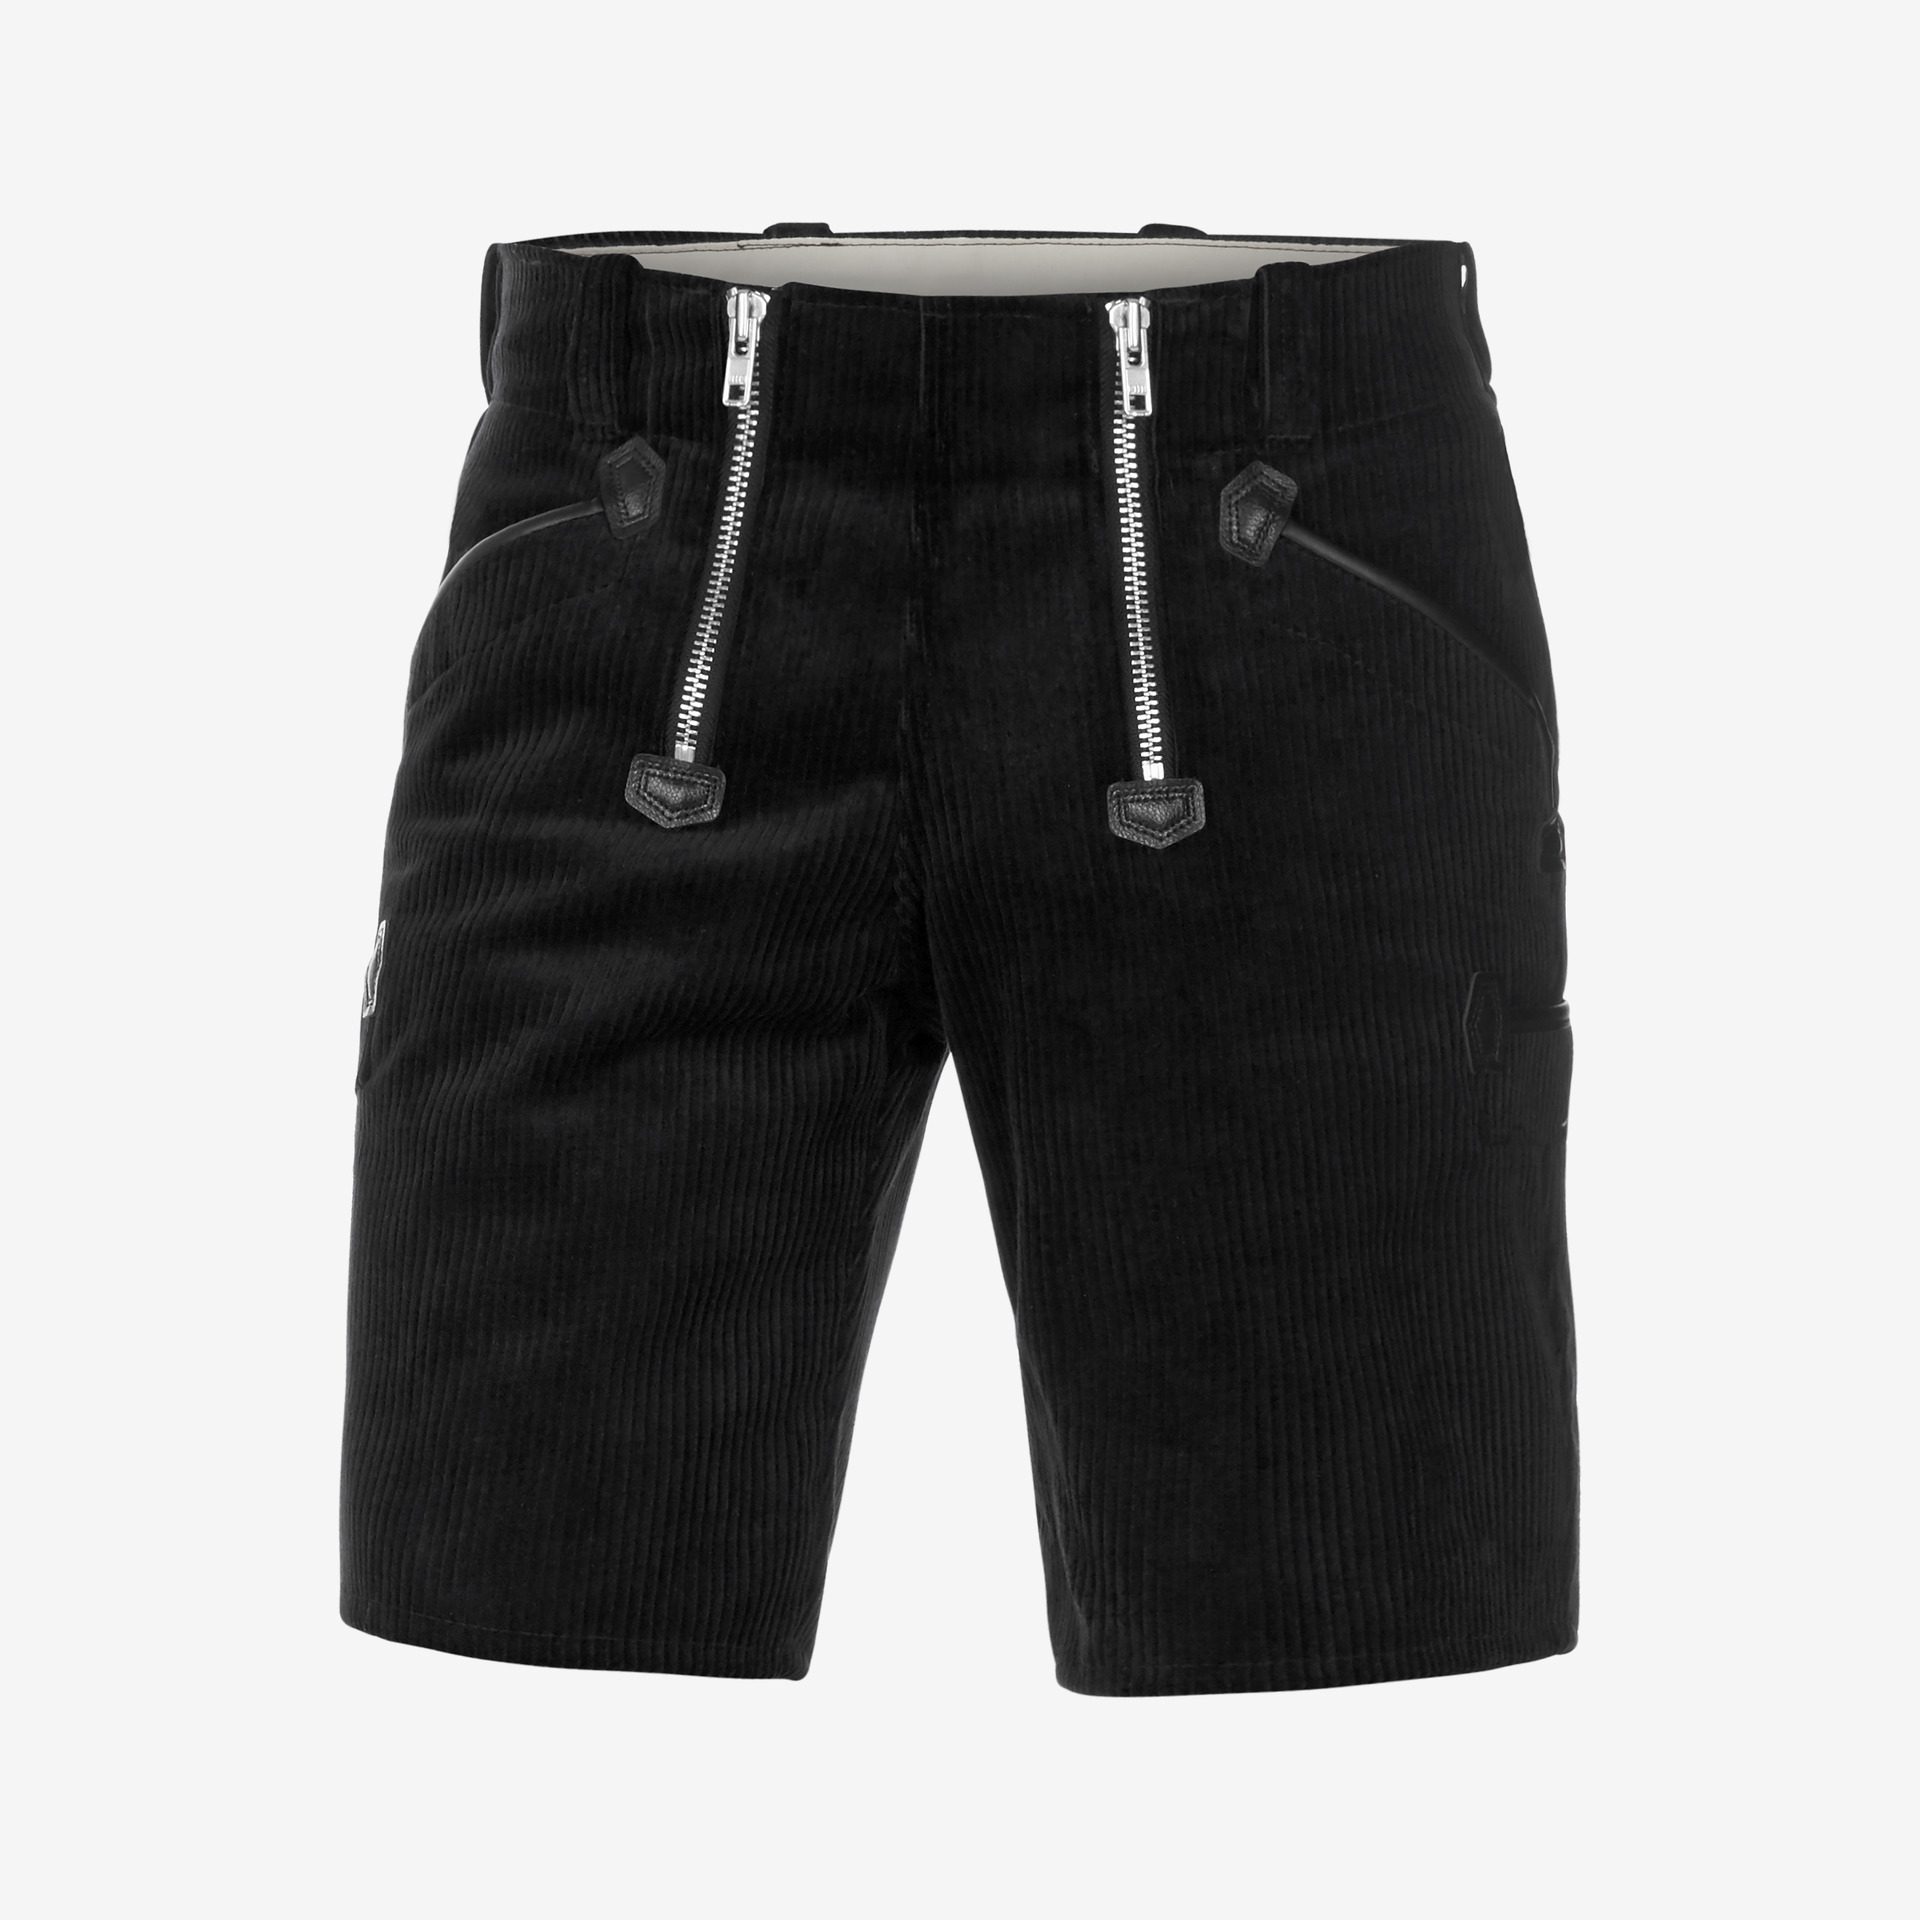 Zunft-Shorts "BERND" Nr. 50033